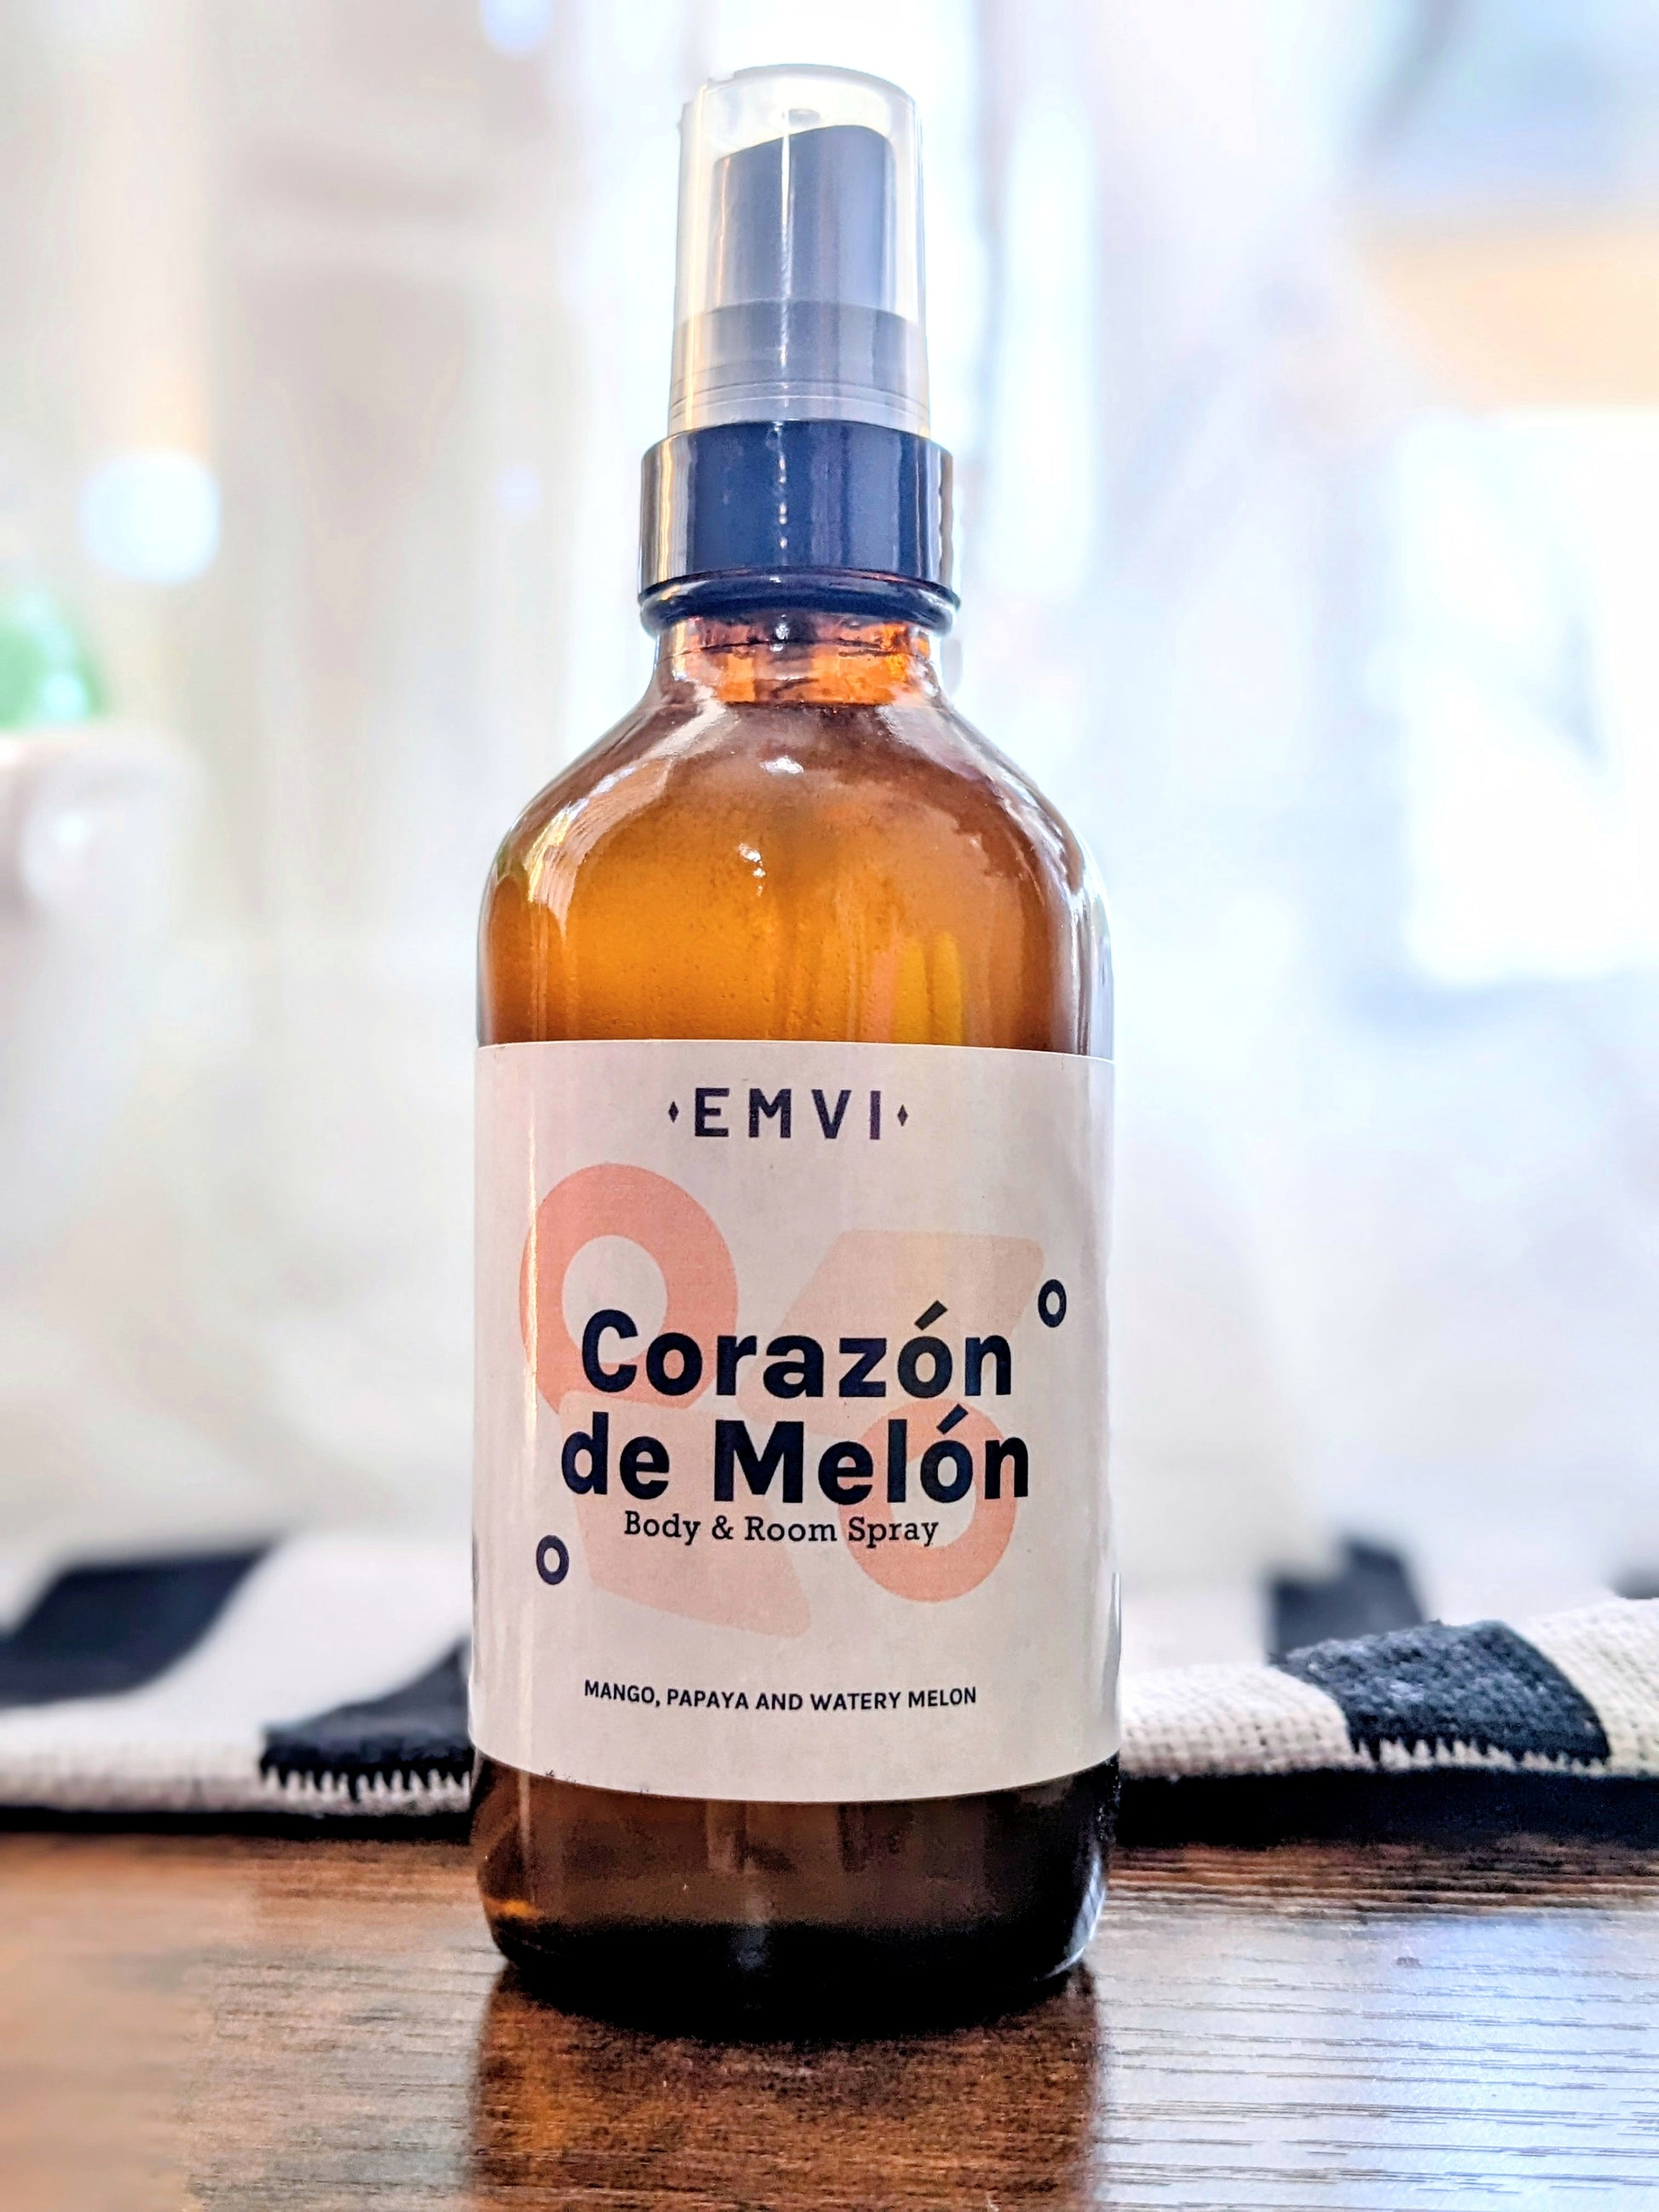 Corazon de Melon body & room spray packaged in an amber glass bottle